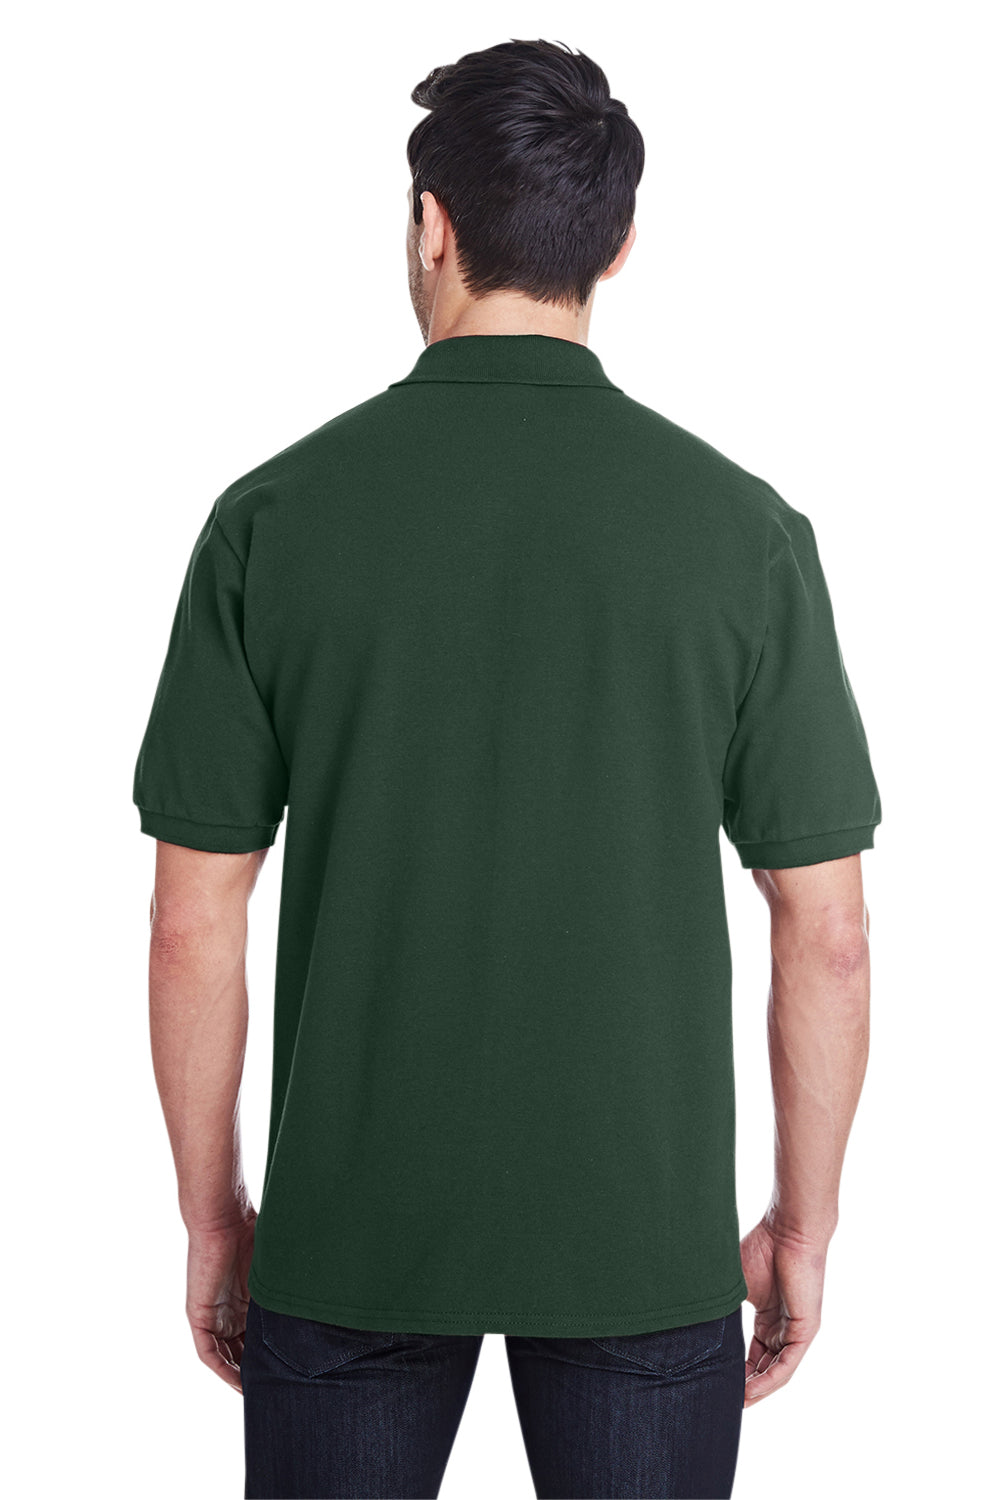 Jerzees 443MR Mens Short Sleeve Polo Shirt Forest Green Back